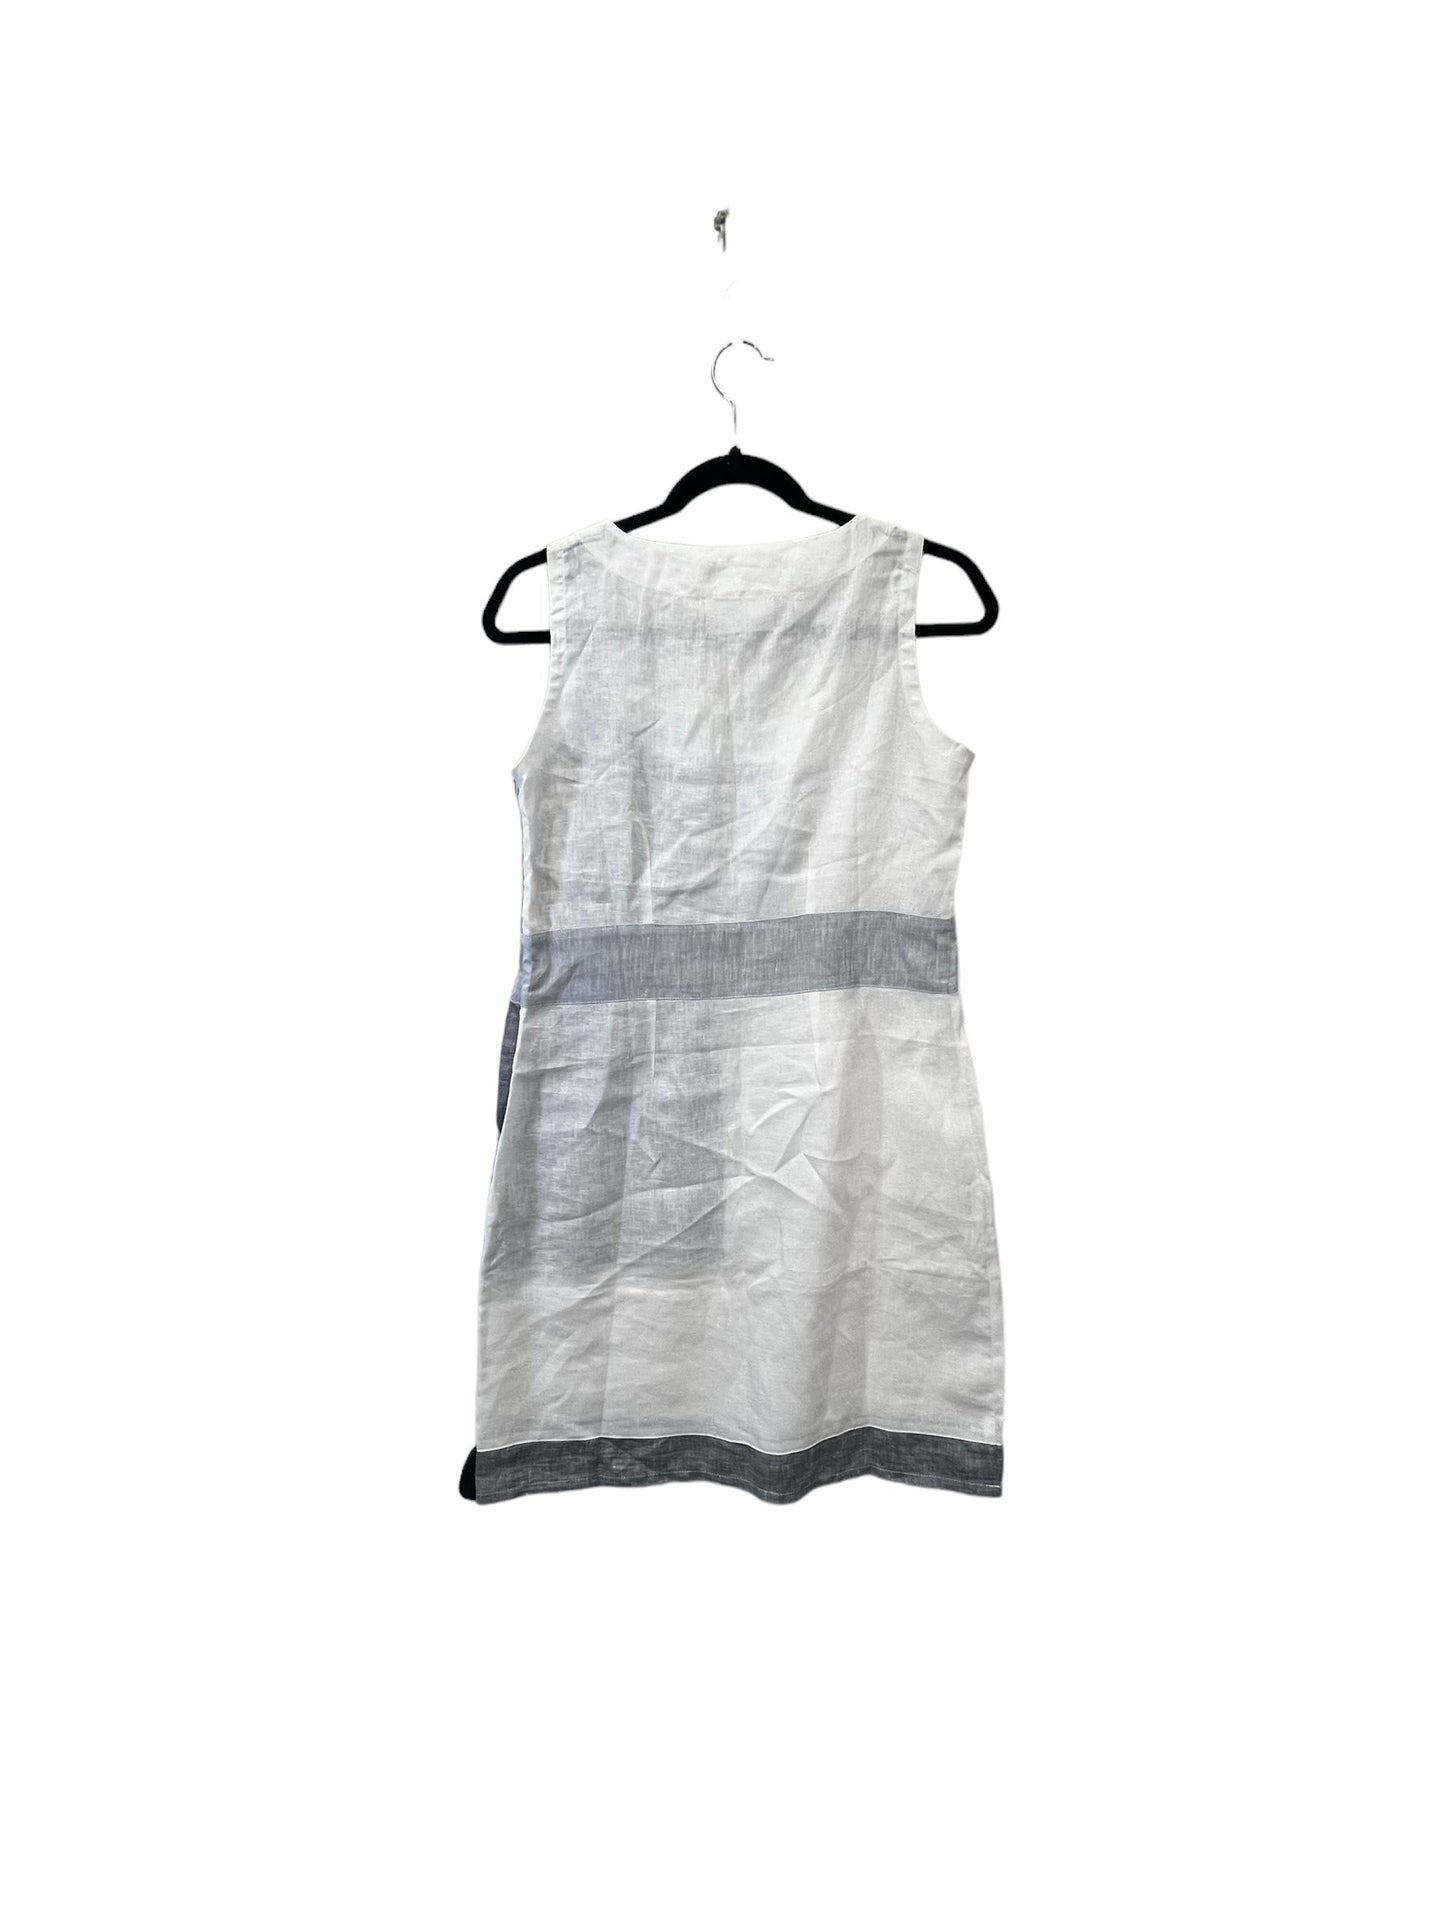 Grey & White Dress Designer Cmc, Size S